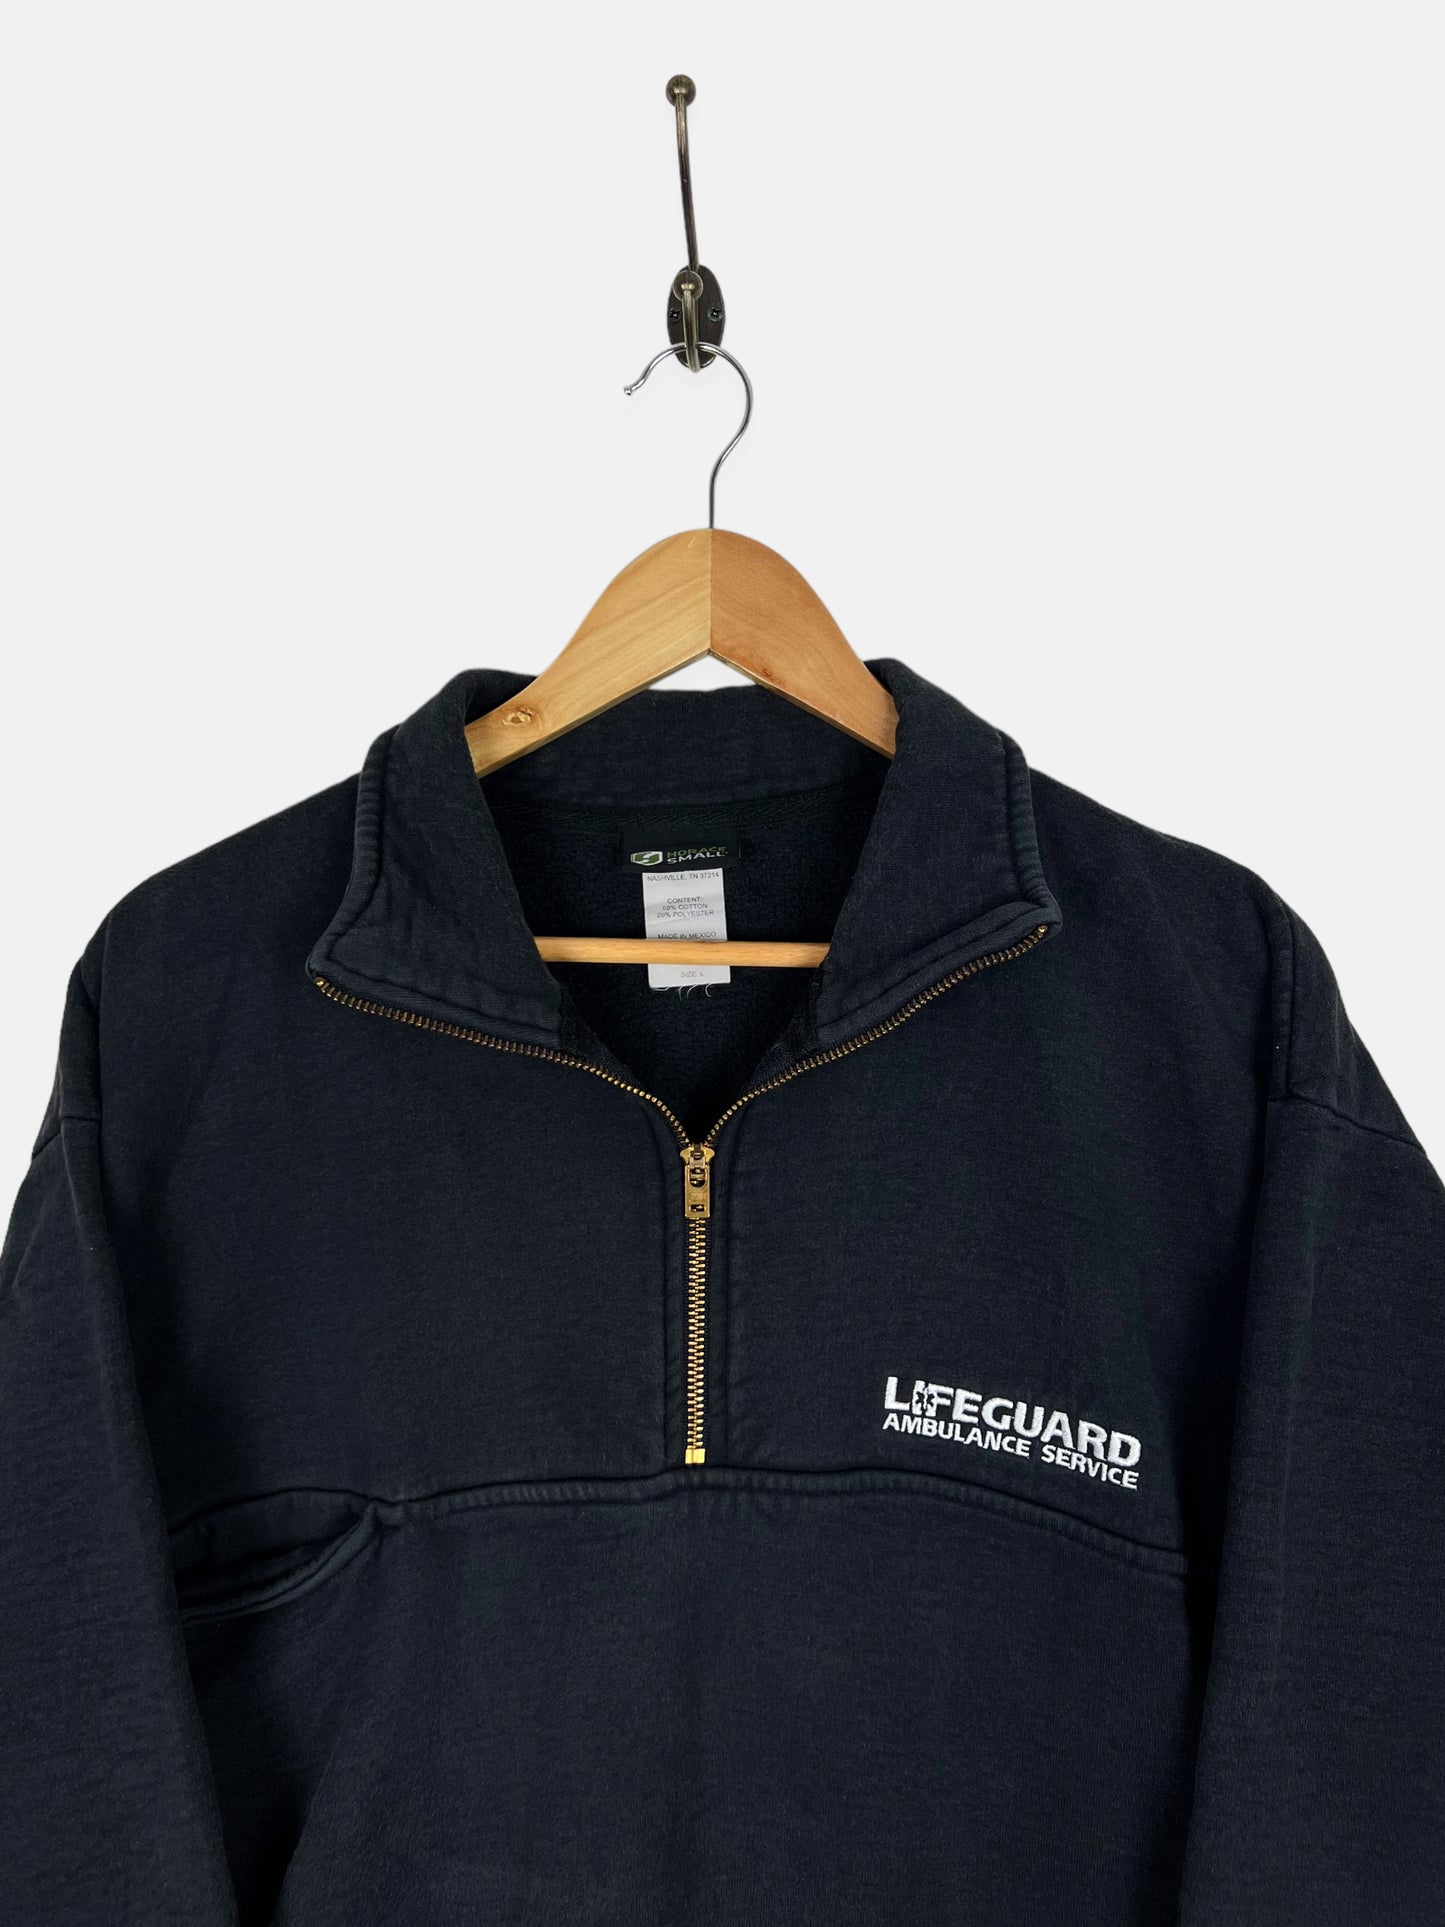 90's Lifeguard Ambulance Service Embroidered Vintage Quarterzip Sweatshirt Size L-XL